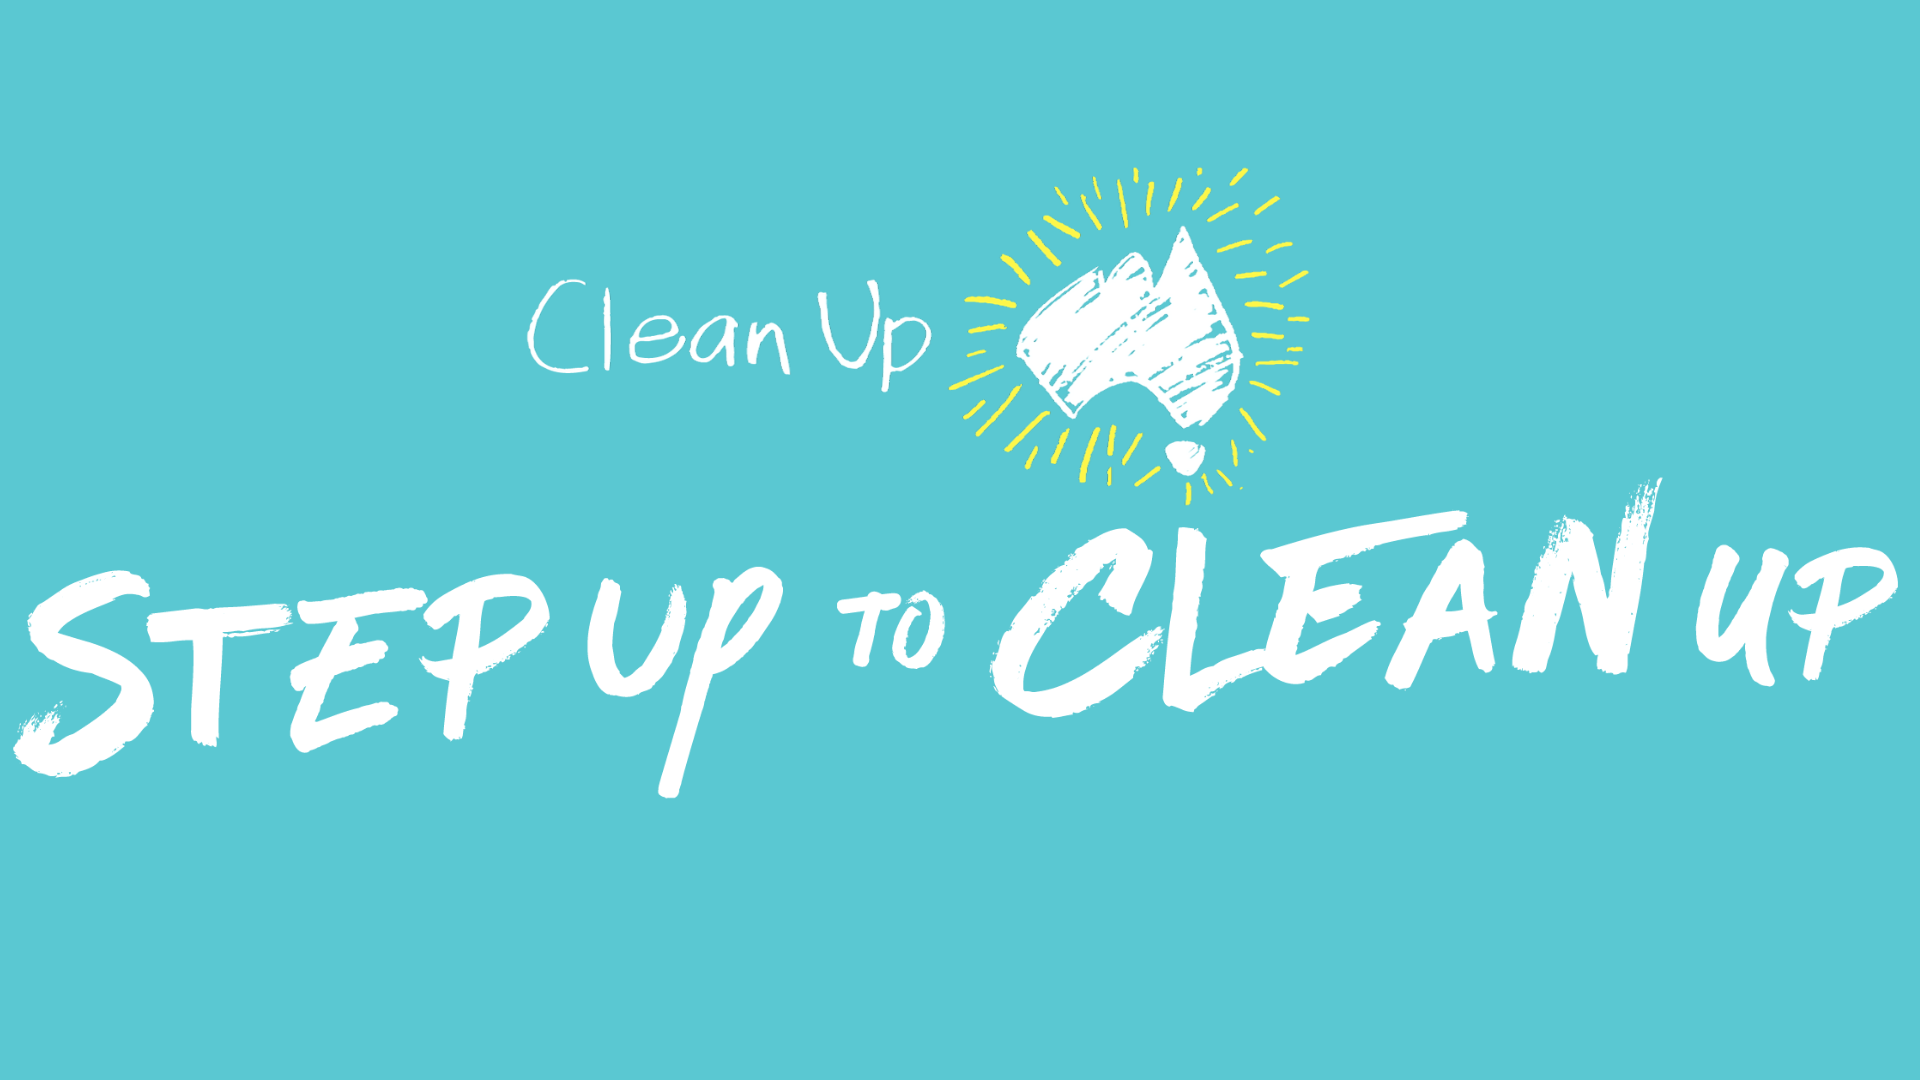 Clean Up Australia Day at Bonython Park